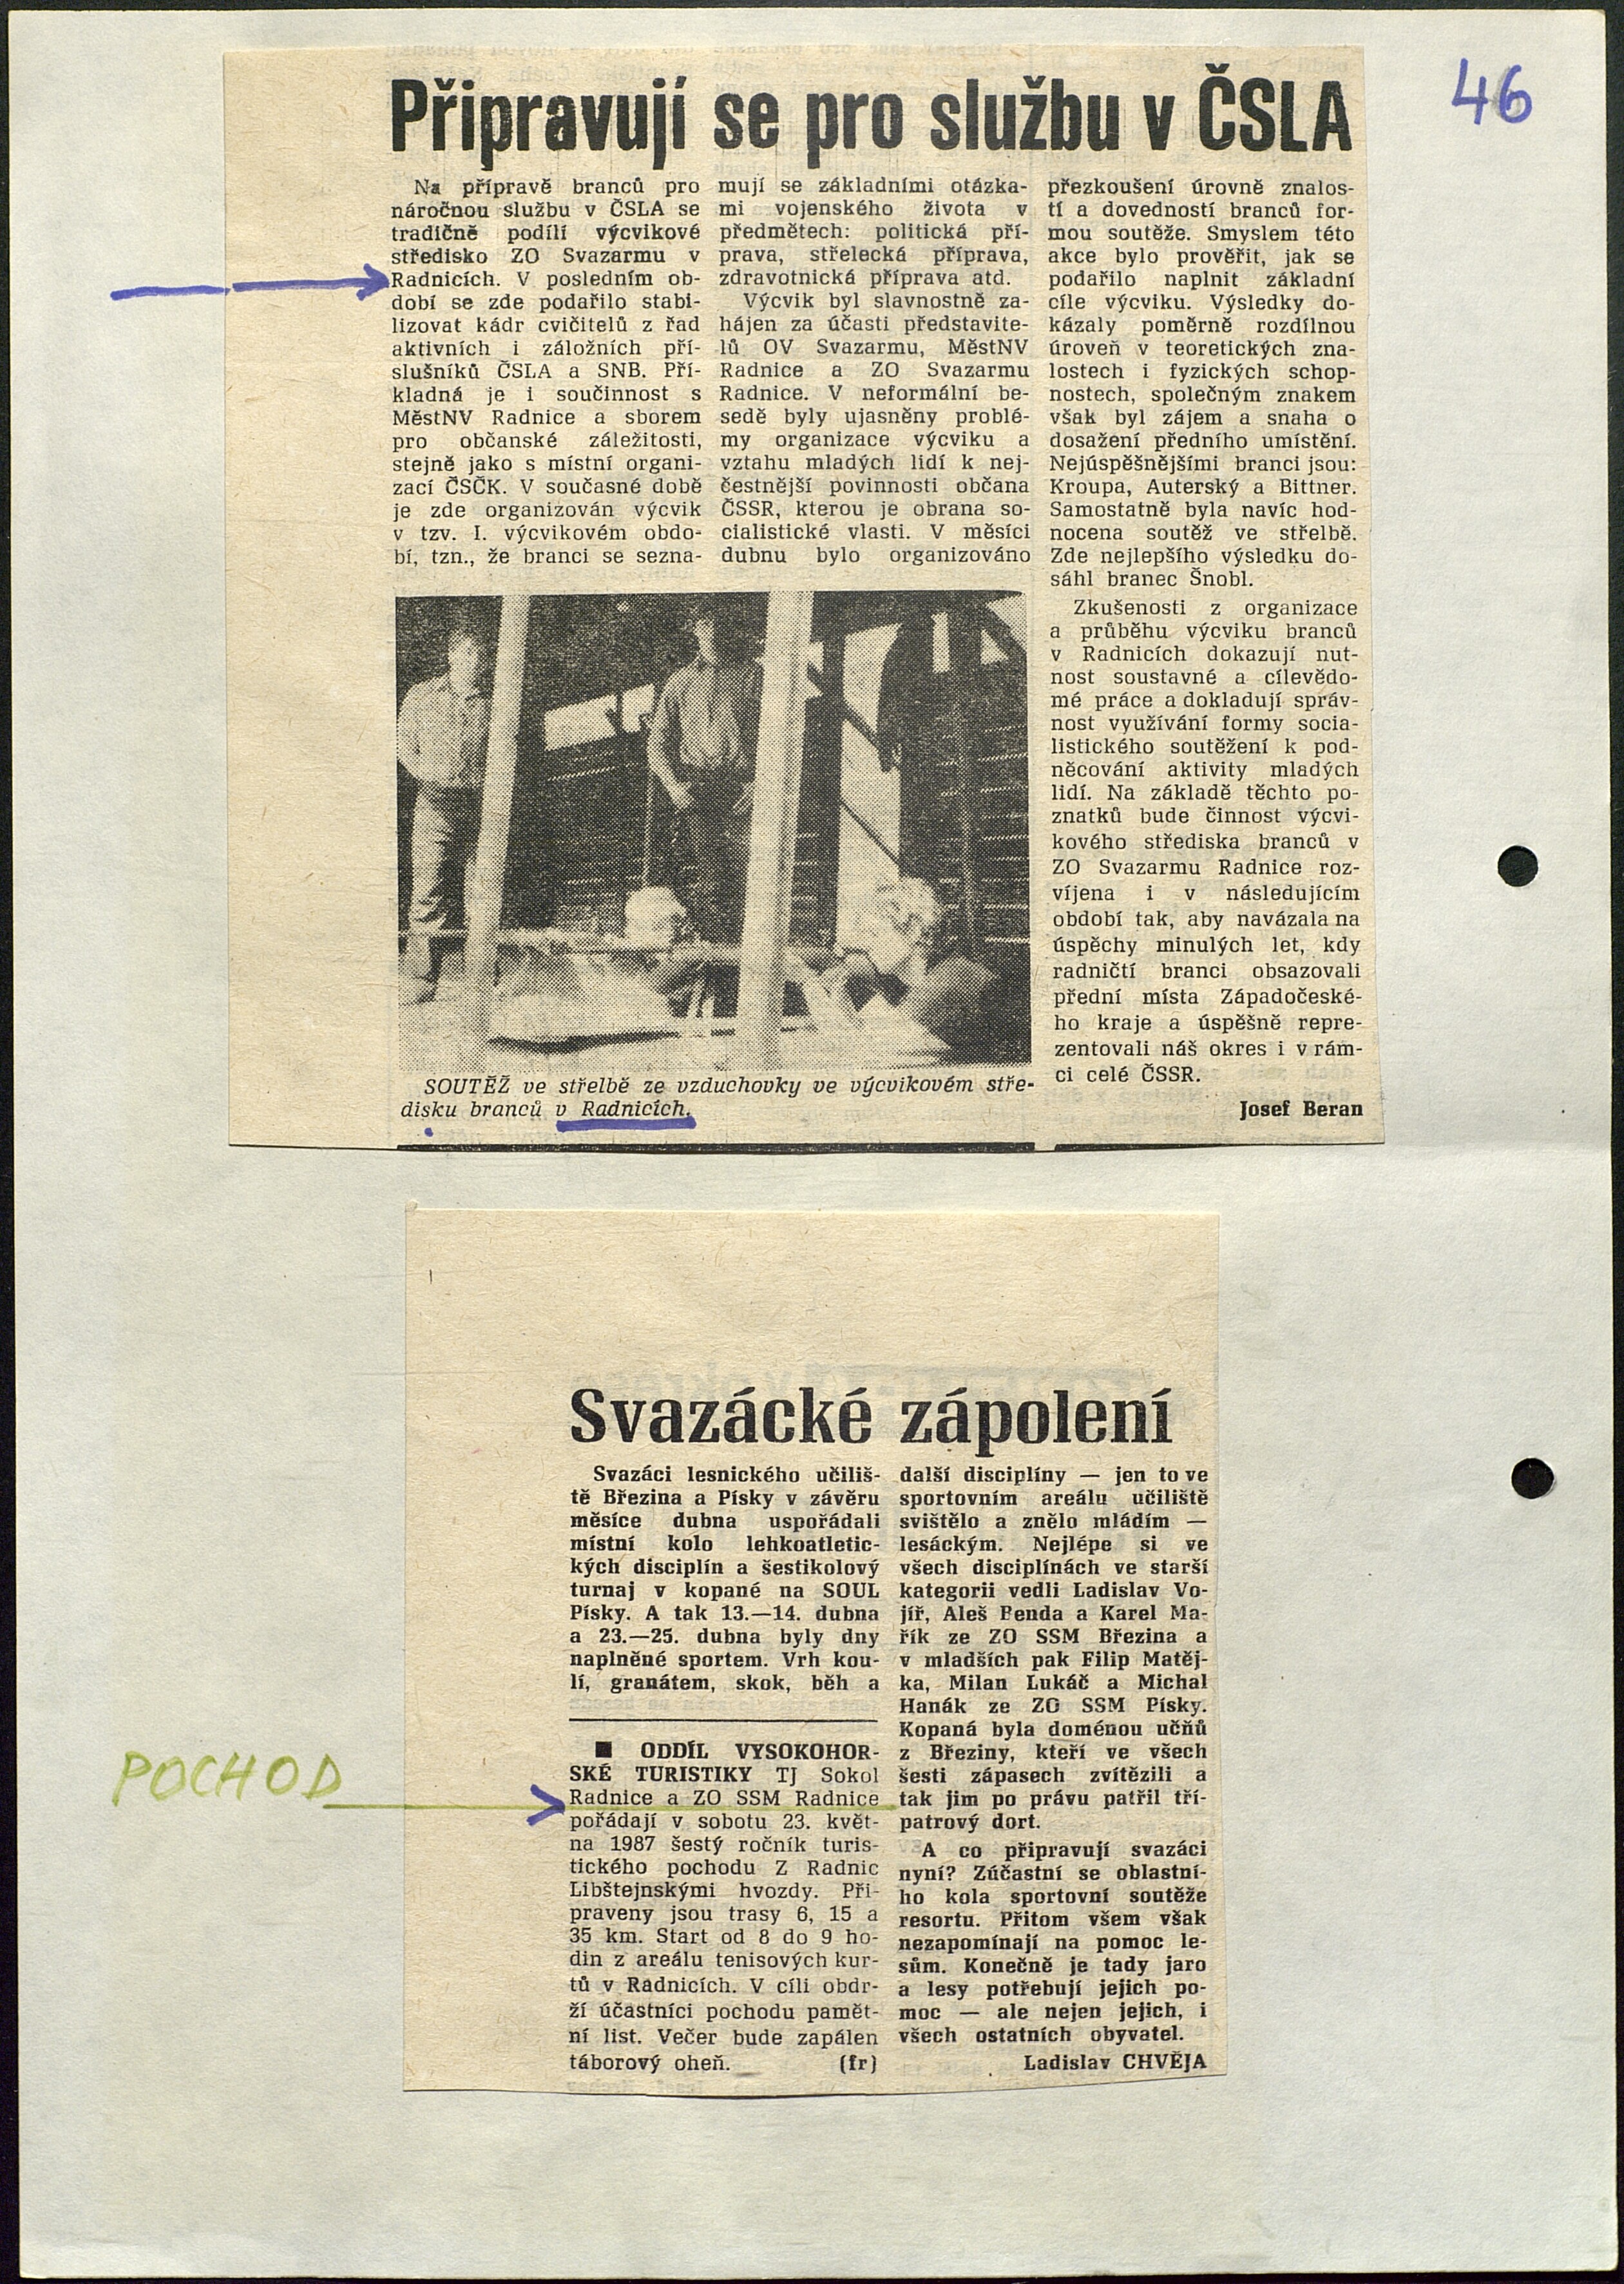 351. soap-ro_00152_mesto-radnice-priloha-1986-1987_3510